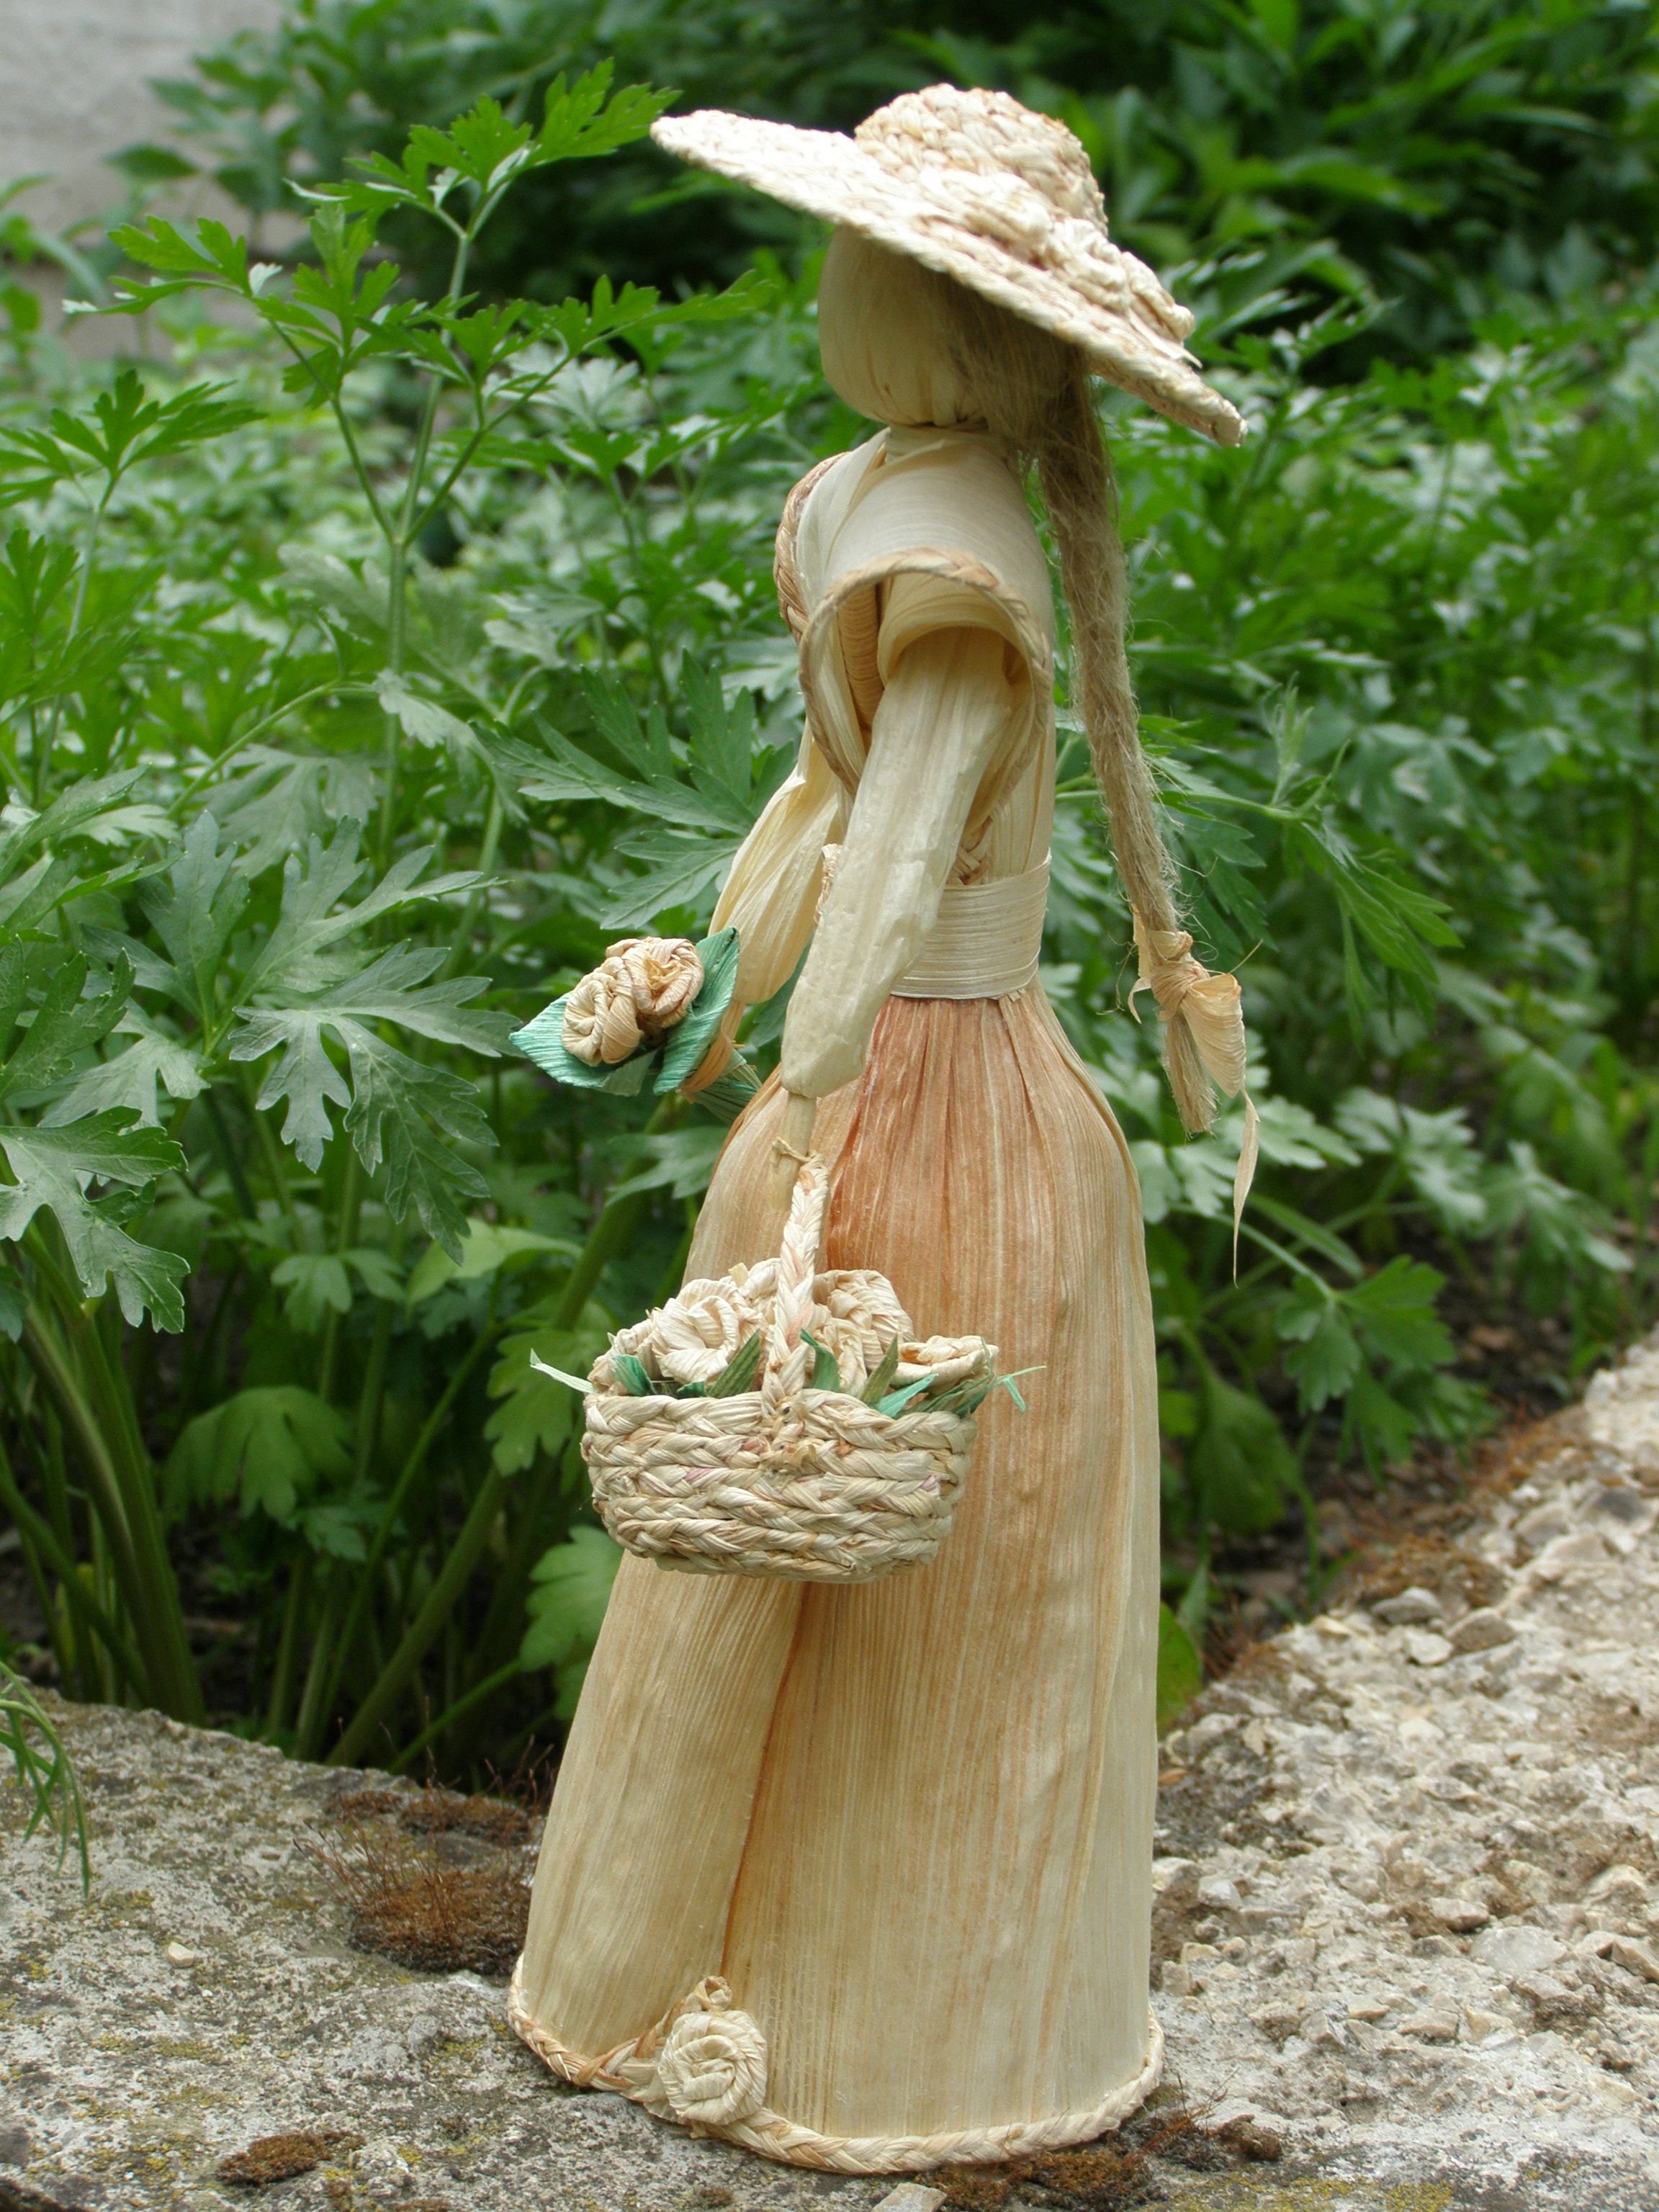 Crafty corn poppy. Кукла из кукурузы. Поделки из талаша своими руками. Куклы из кукурузных листьев. Поделки из листьев кукурузы.